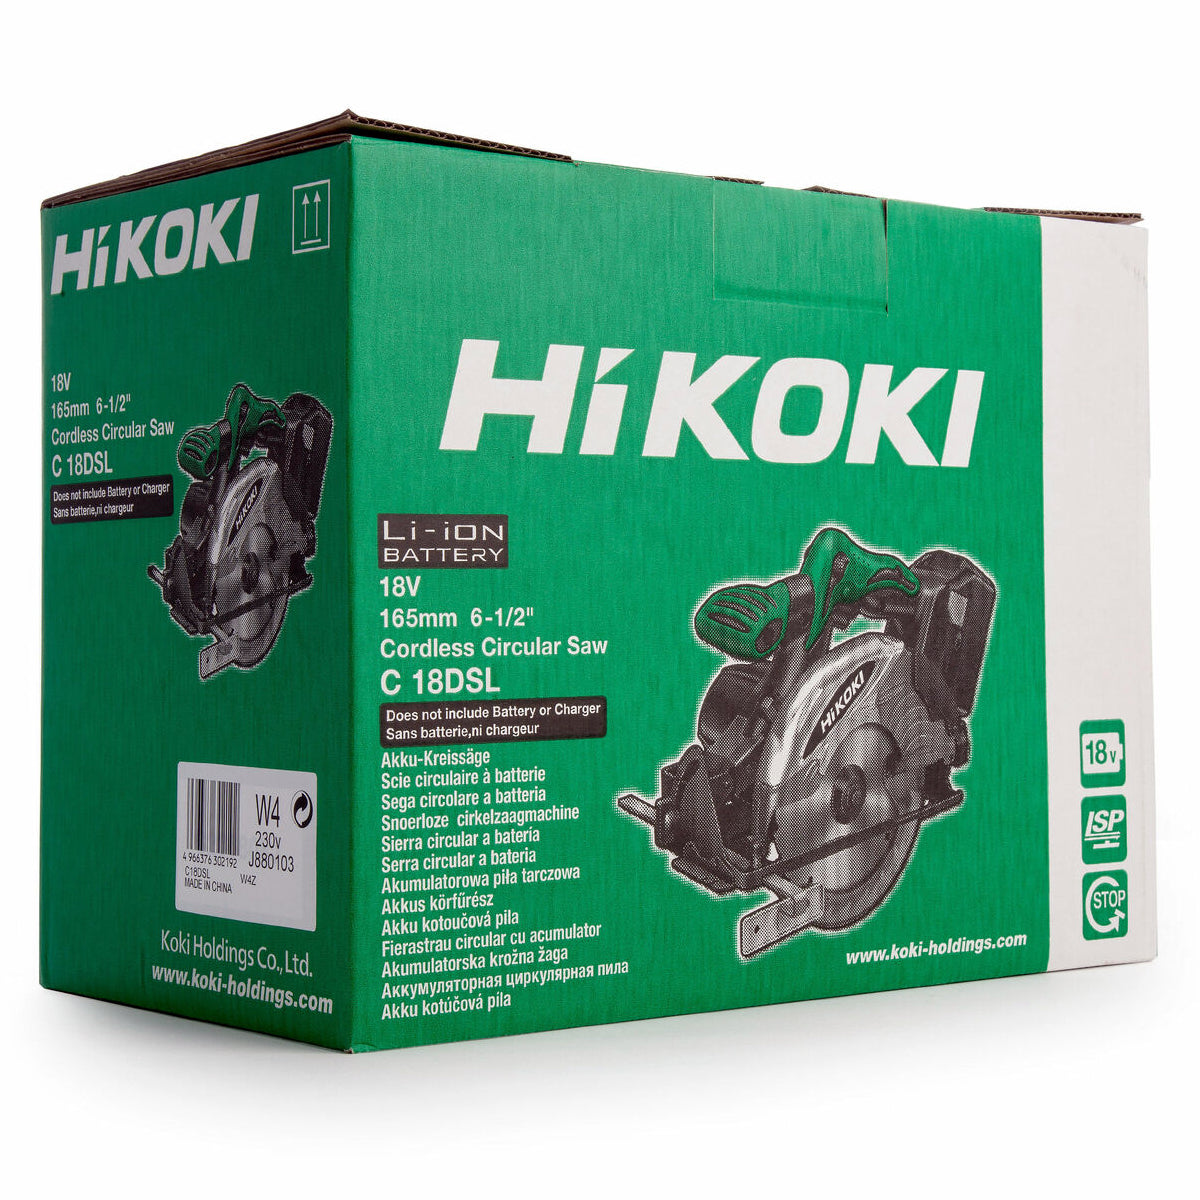 Hikoki C18DSL 18V 165mm Cordless Circular Saw Body Only